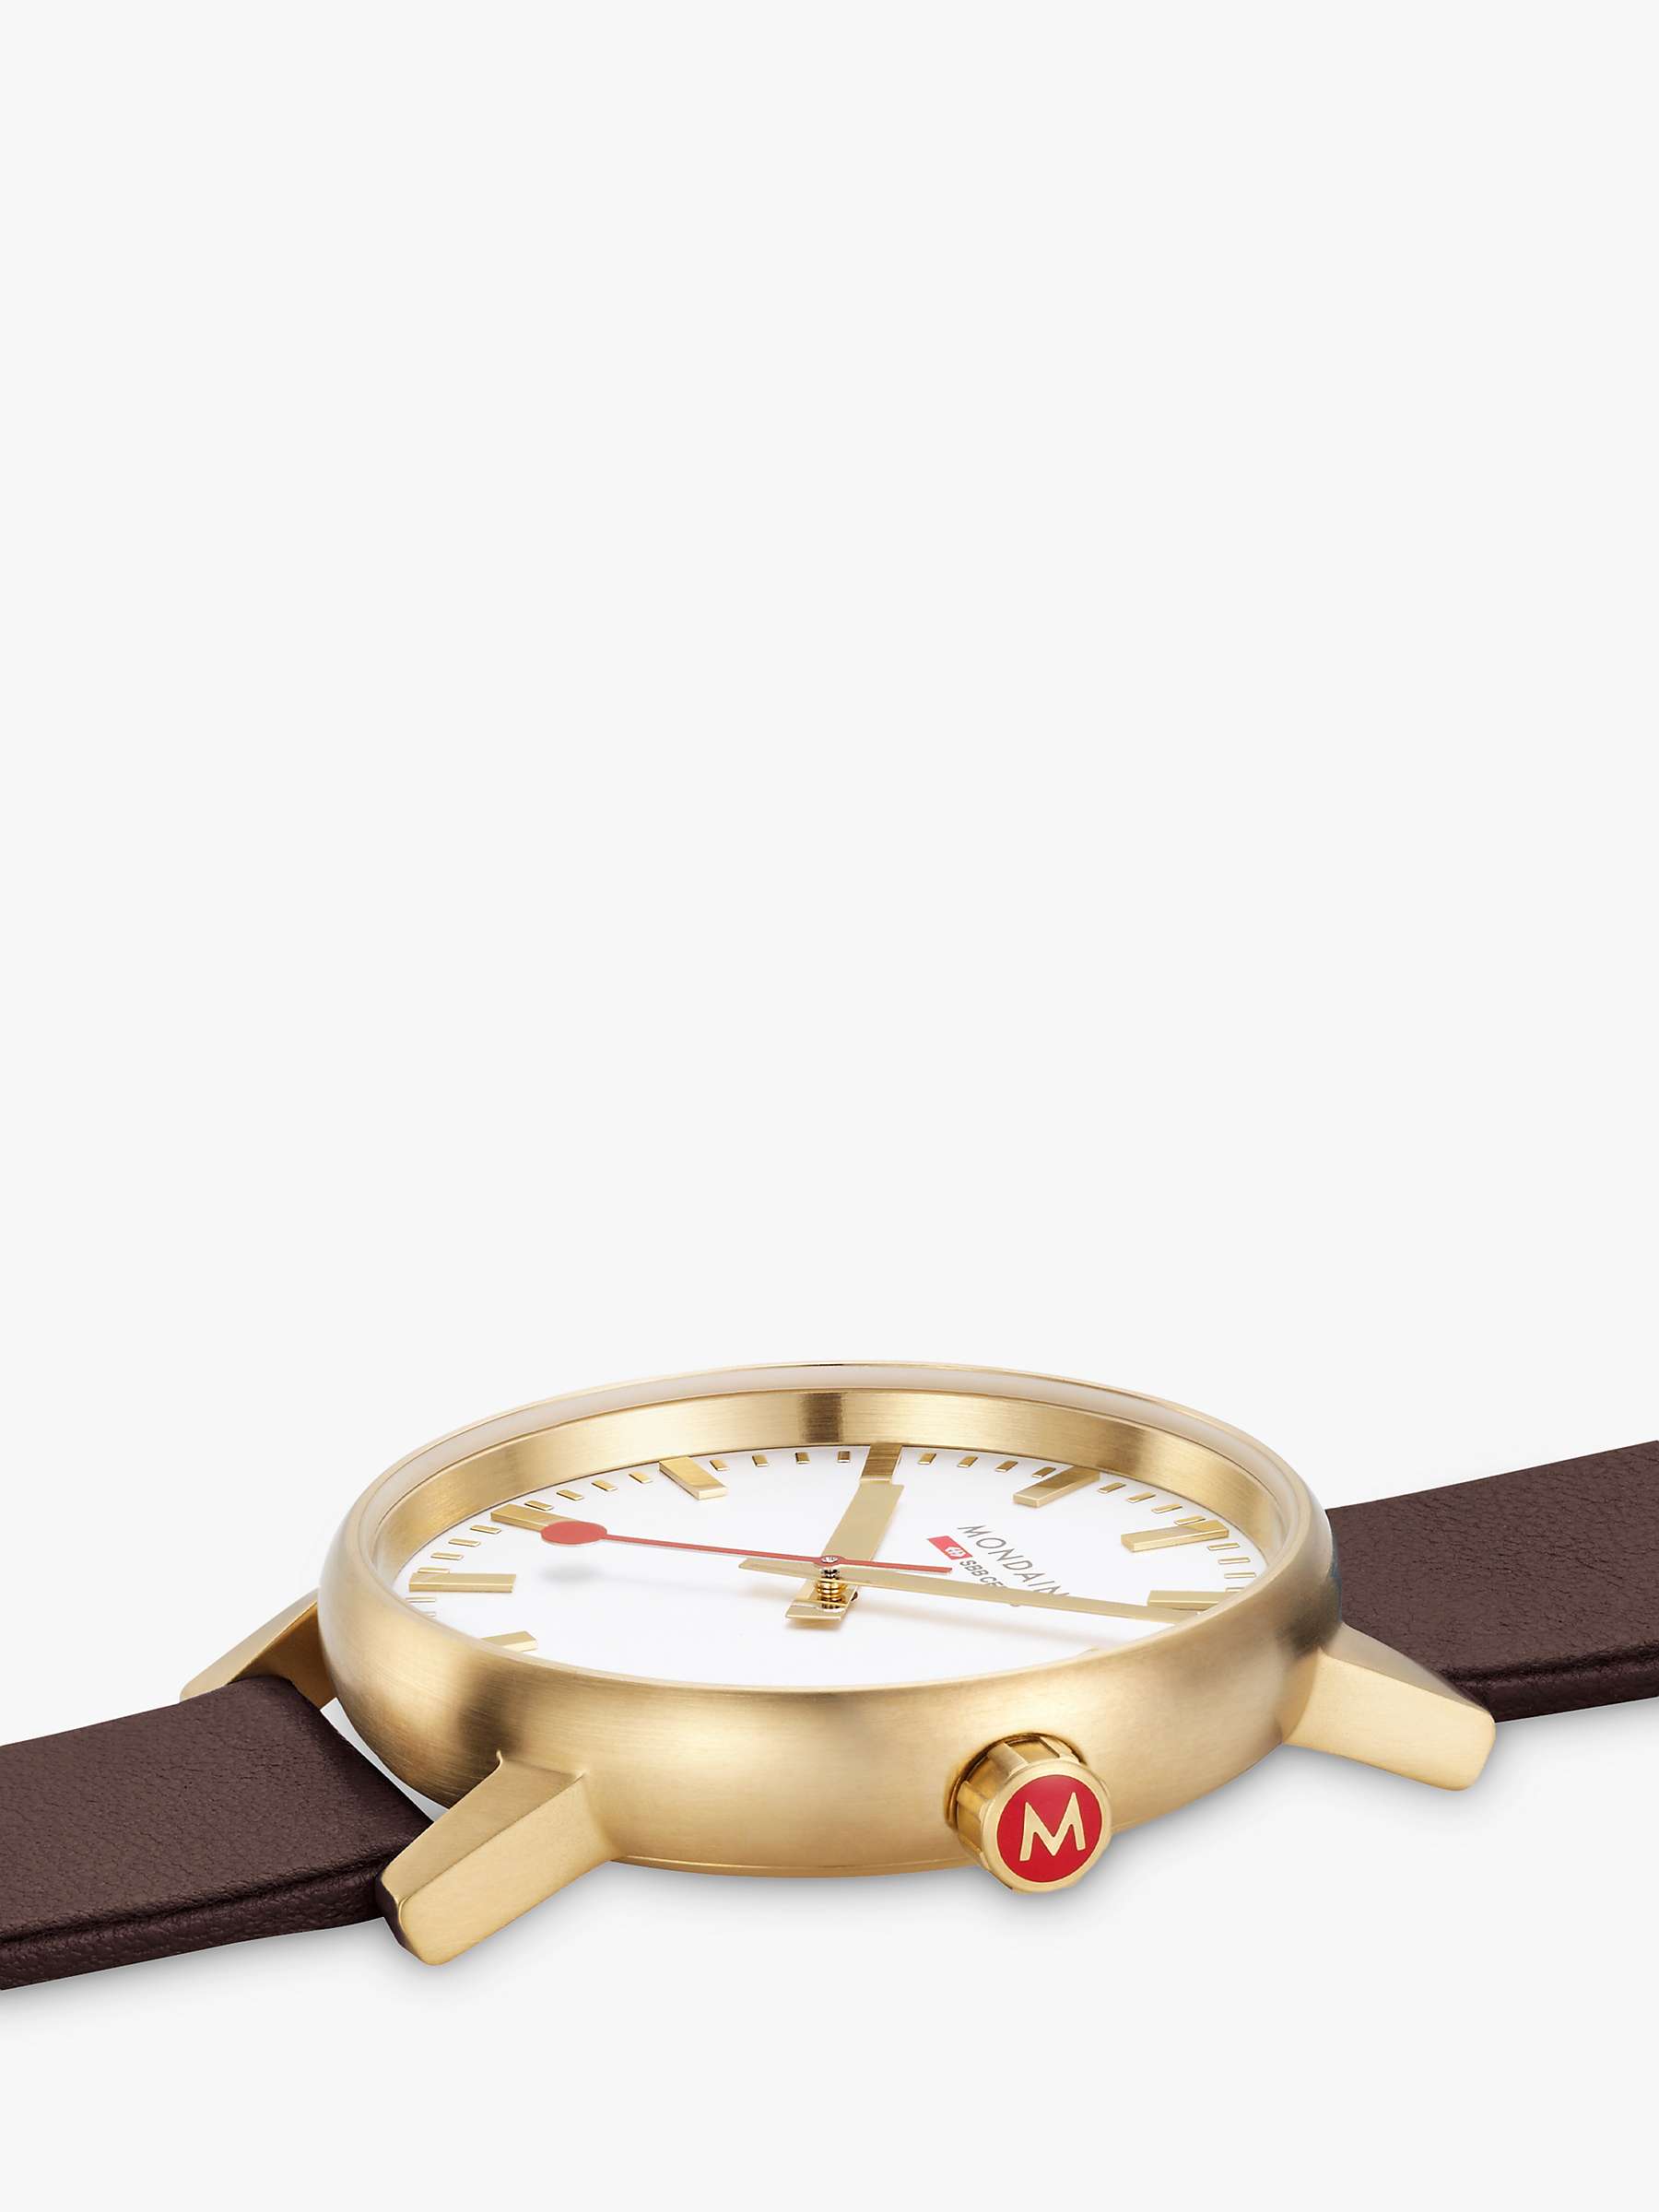 Buy Mondaine MSE.40112.LGV Unisex Vegan Leather Strap Watch, Brown Online at johnlewis.com